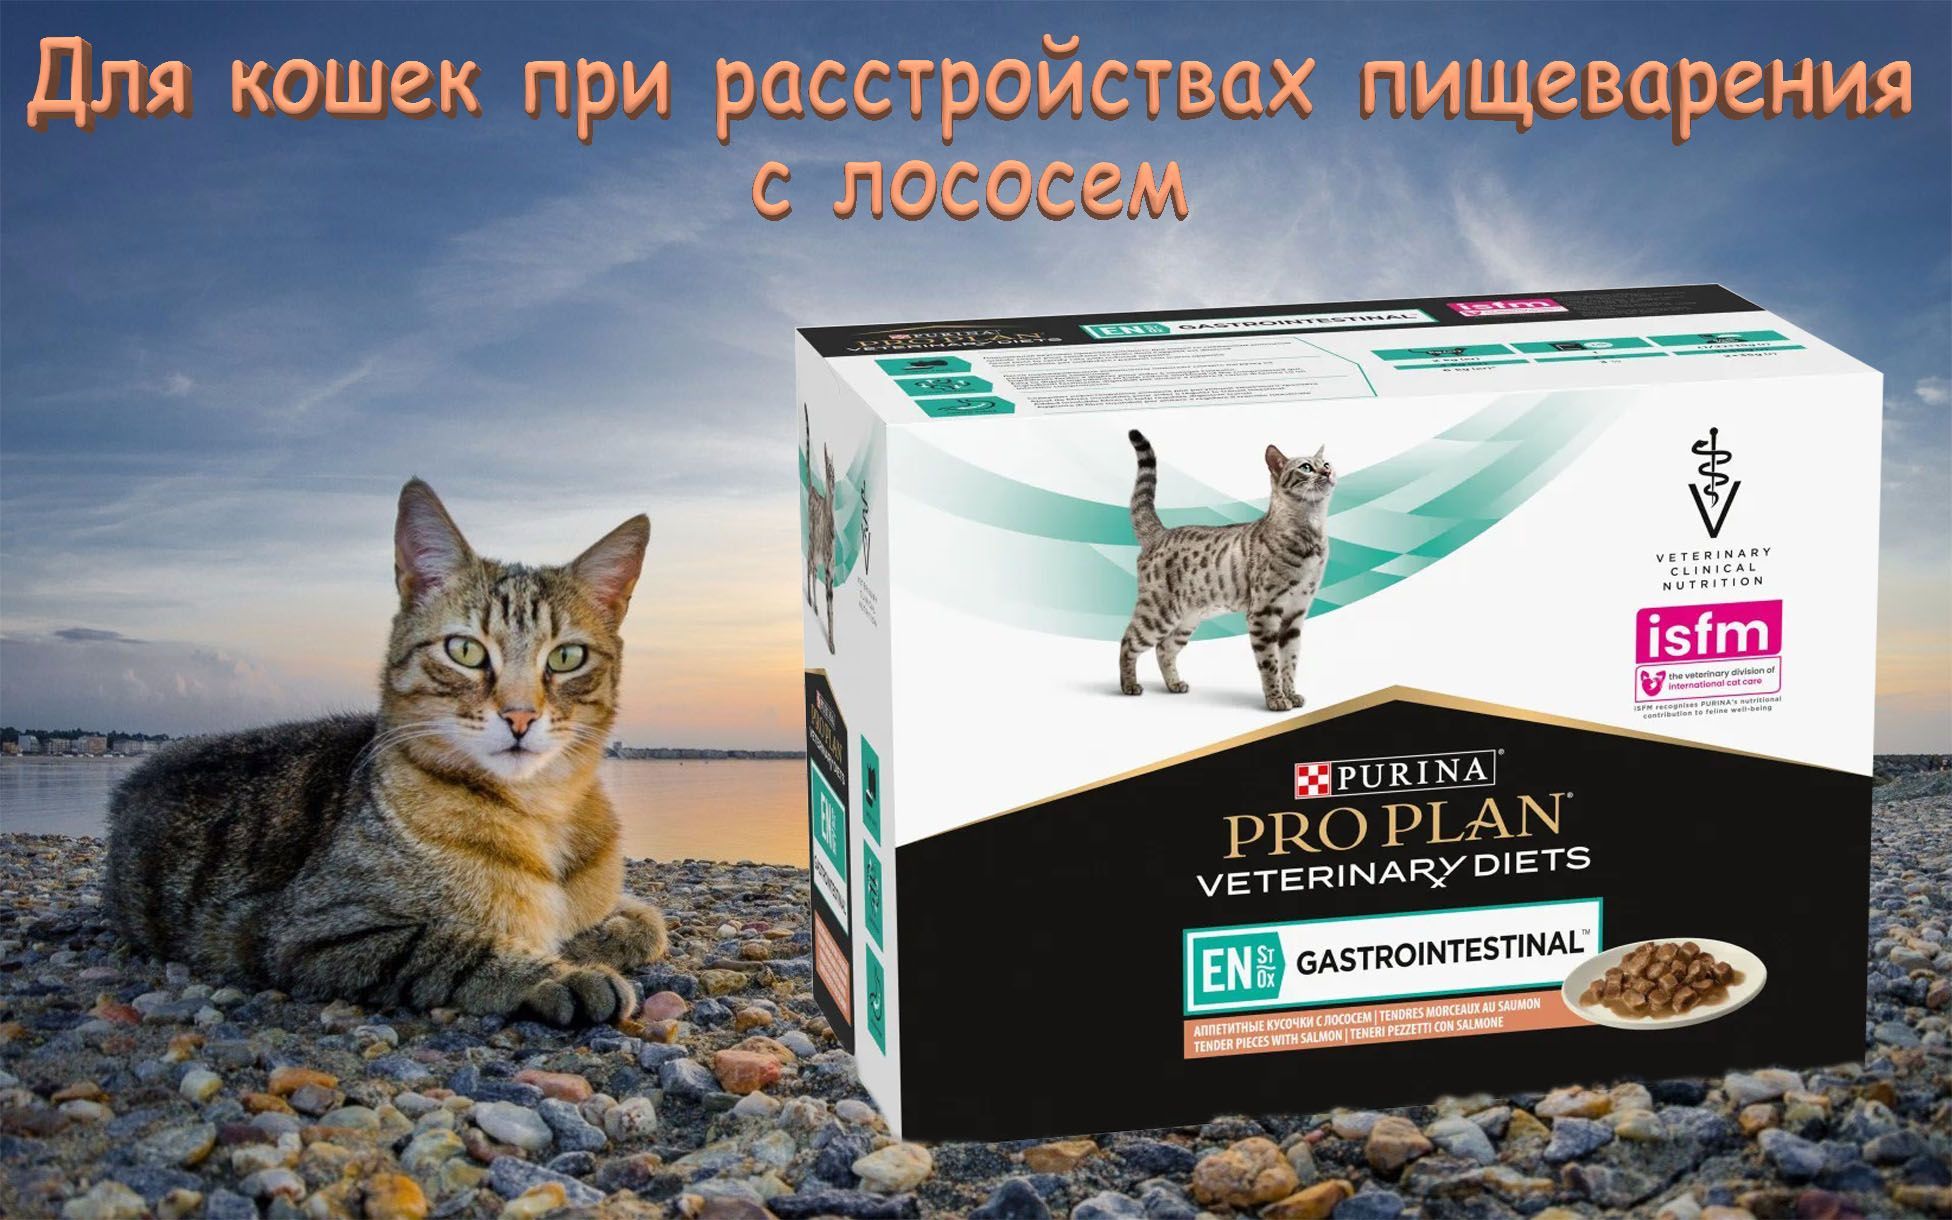 Gastrointestinal корм для кошек купить. Корм для кошек Флорида preventive line Gastrointestinal. Pro Plan Veterinary Diets en Gastrointestinal при расстройствах пищеварения цены.